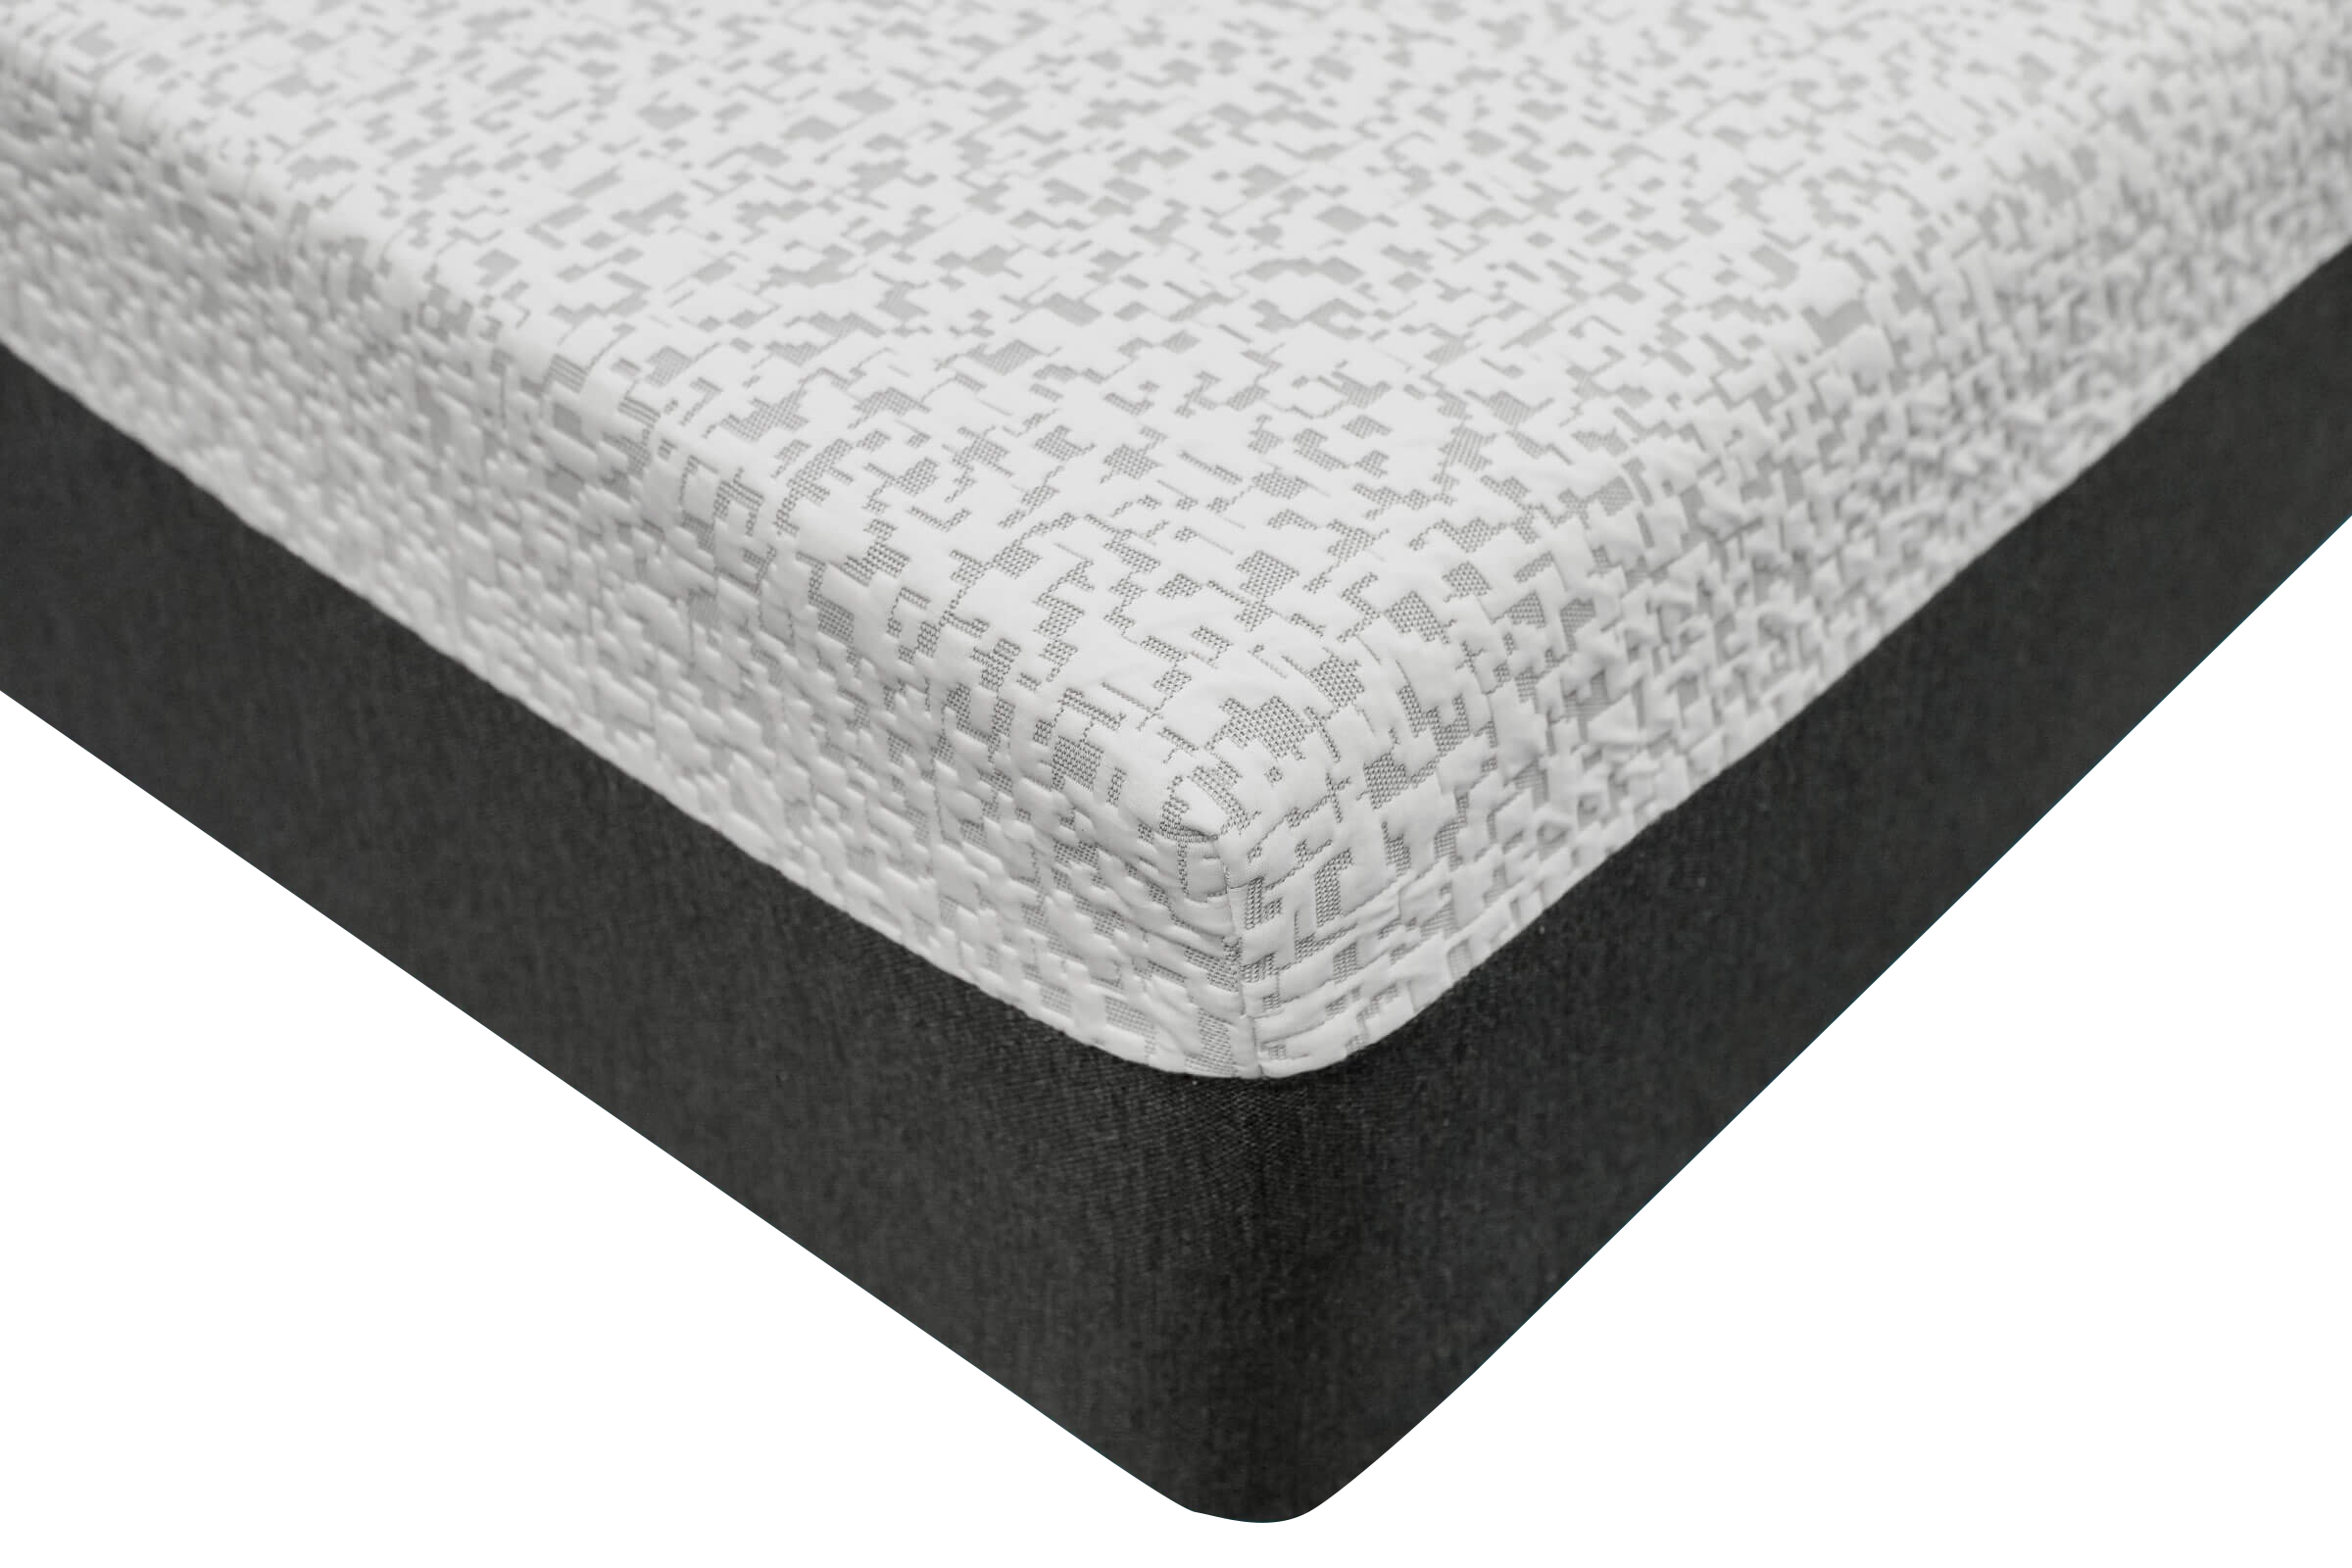 steel vs wood frame for memory foam mattress